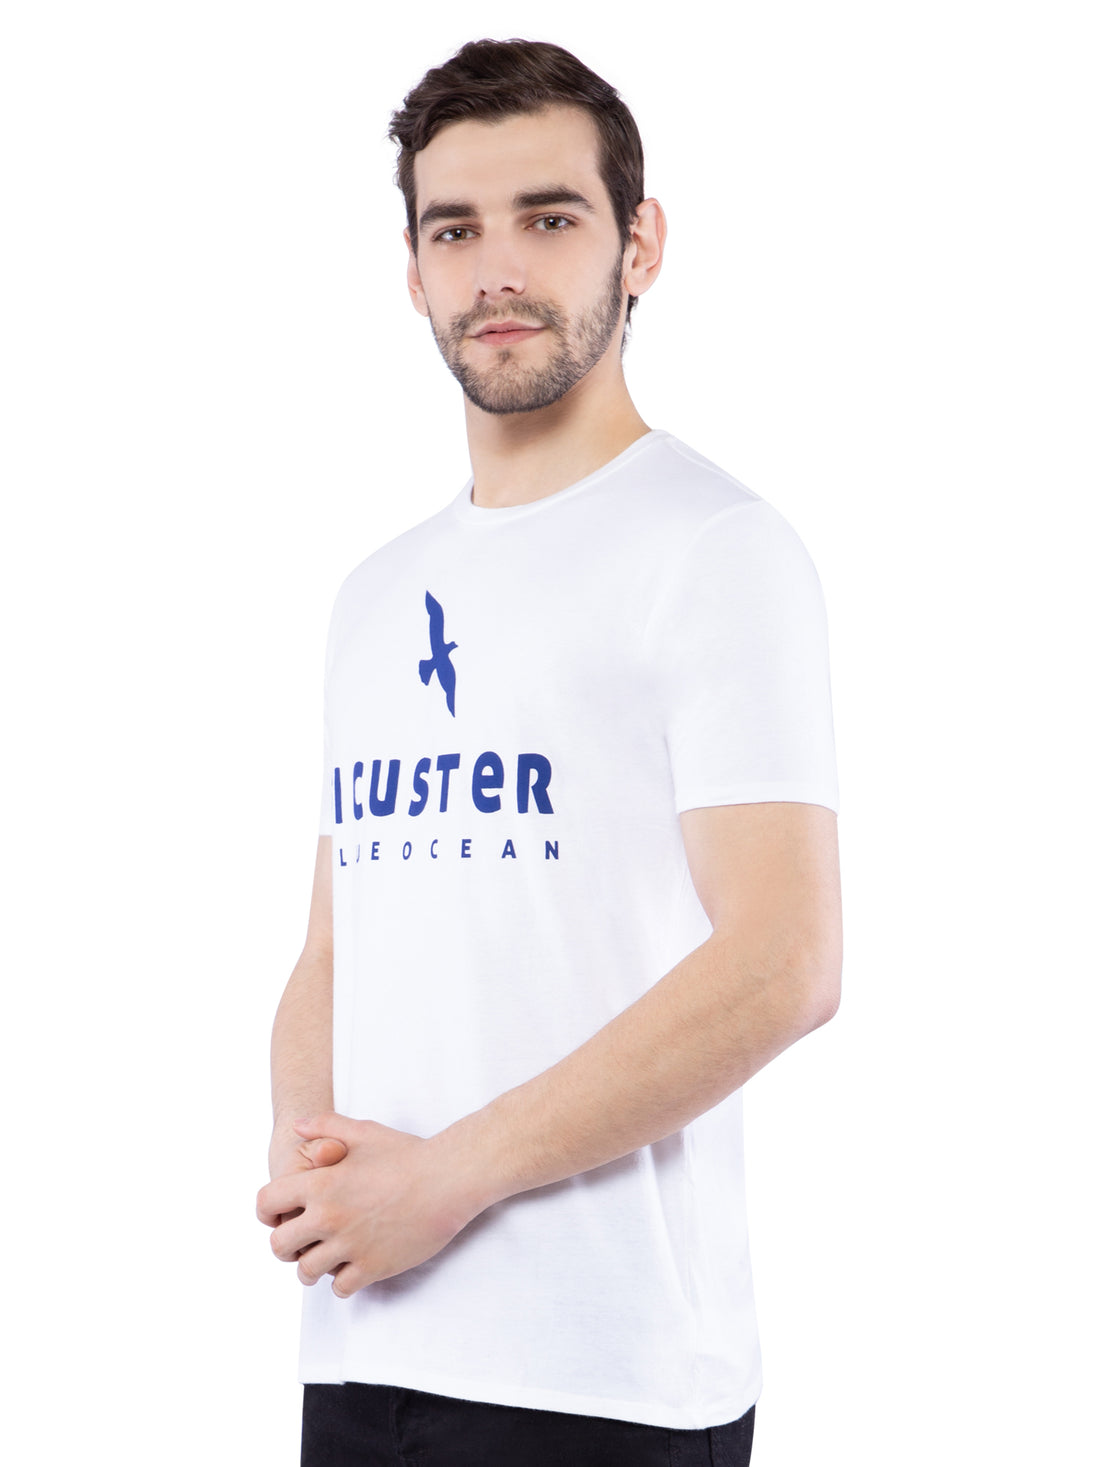 Ficuster Men White Printed T-Shirt